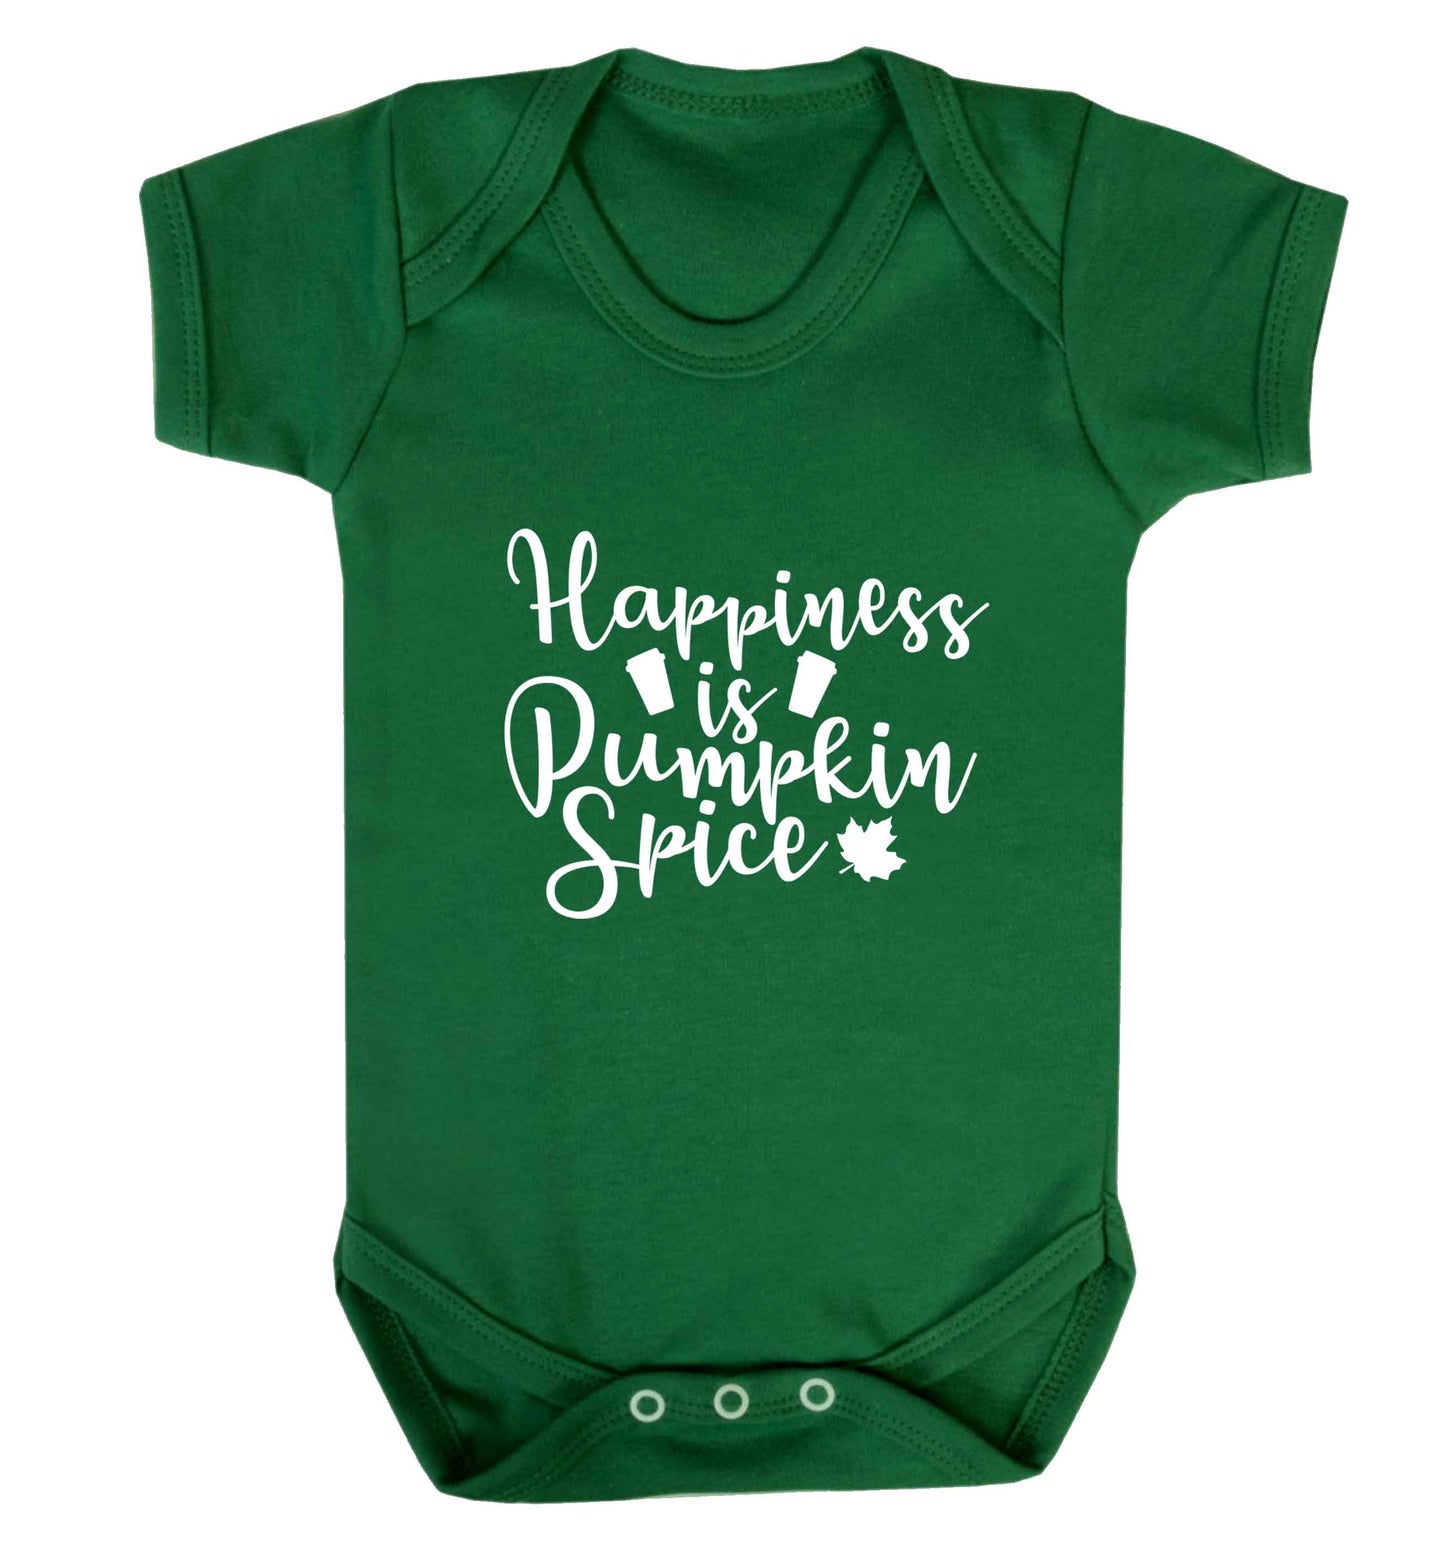 Happiness Pumpkin Spice baby vest green 18-24 months